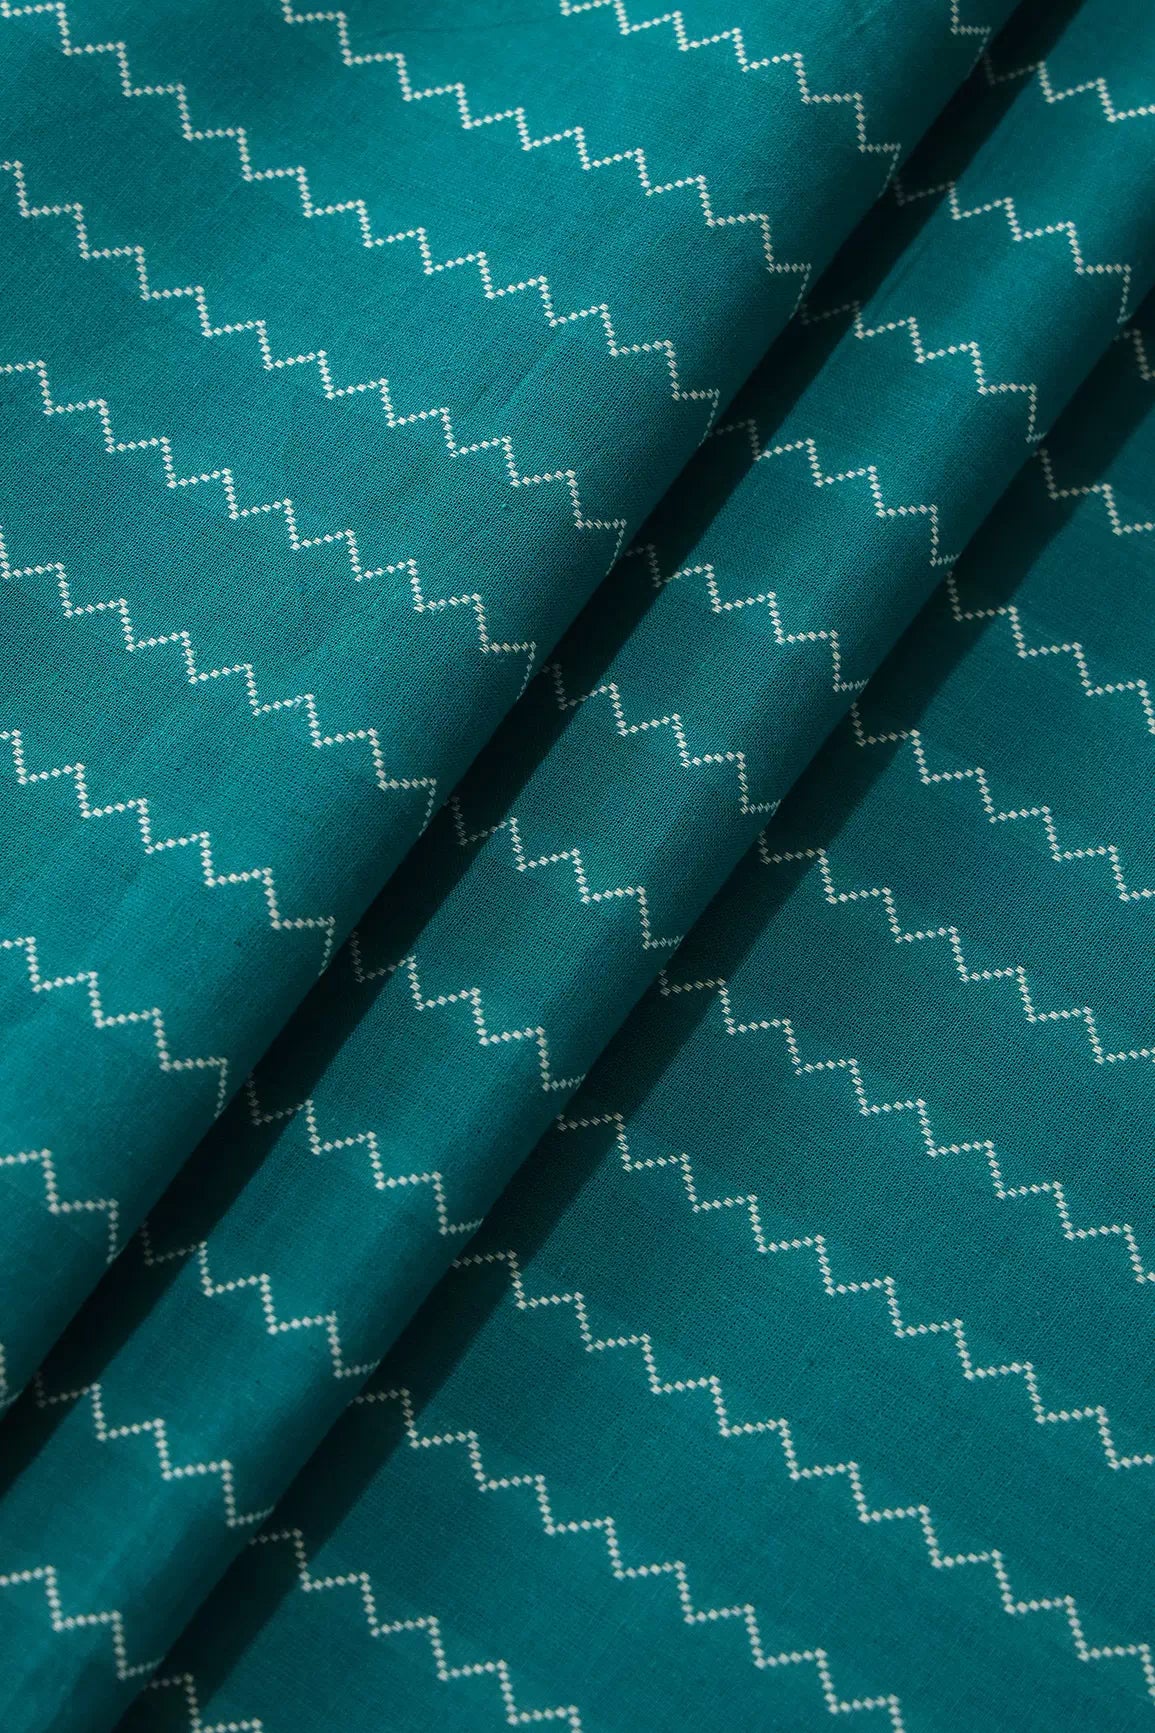 Dark Turquoise And White Chevron Pattern On Handwoven Organic Cotton Fabric